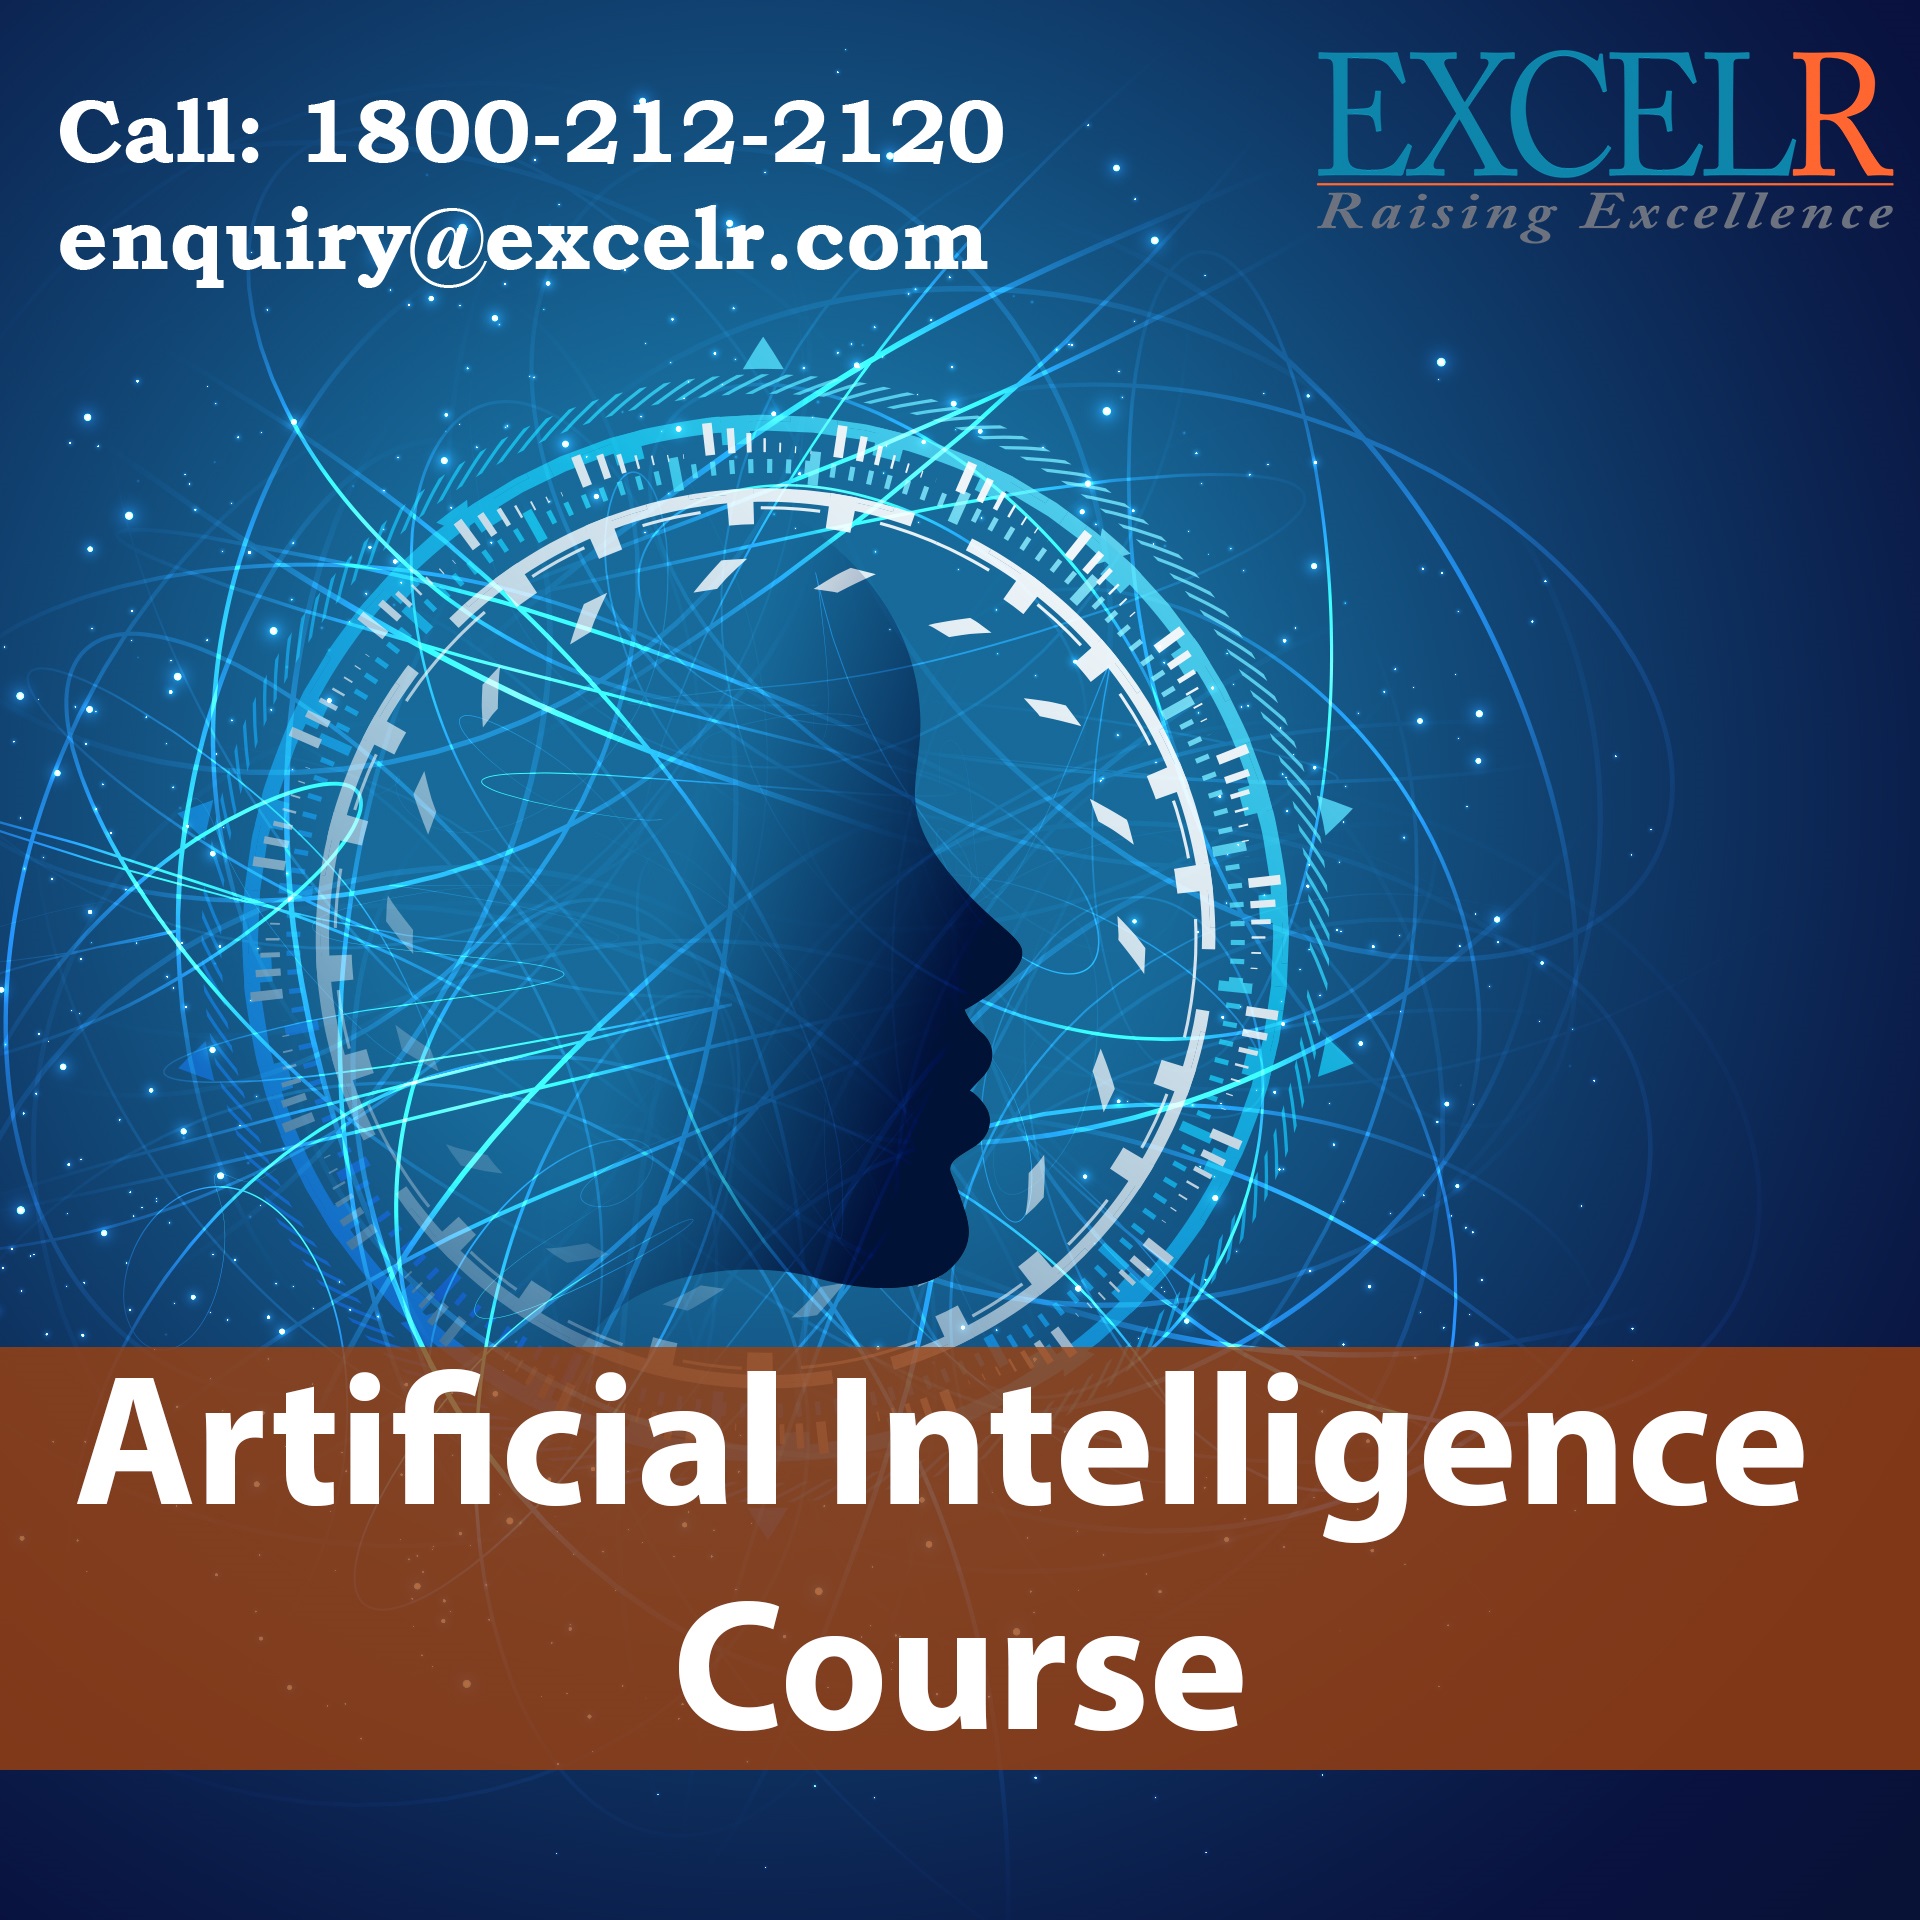 Artifical intelligence course in bangalore, Bangalore, Karnataka, India